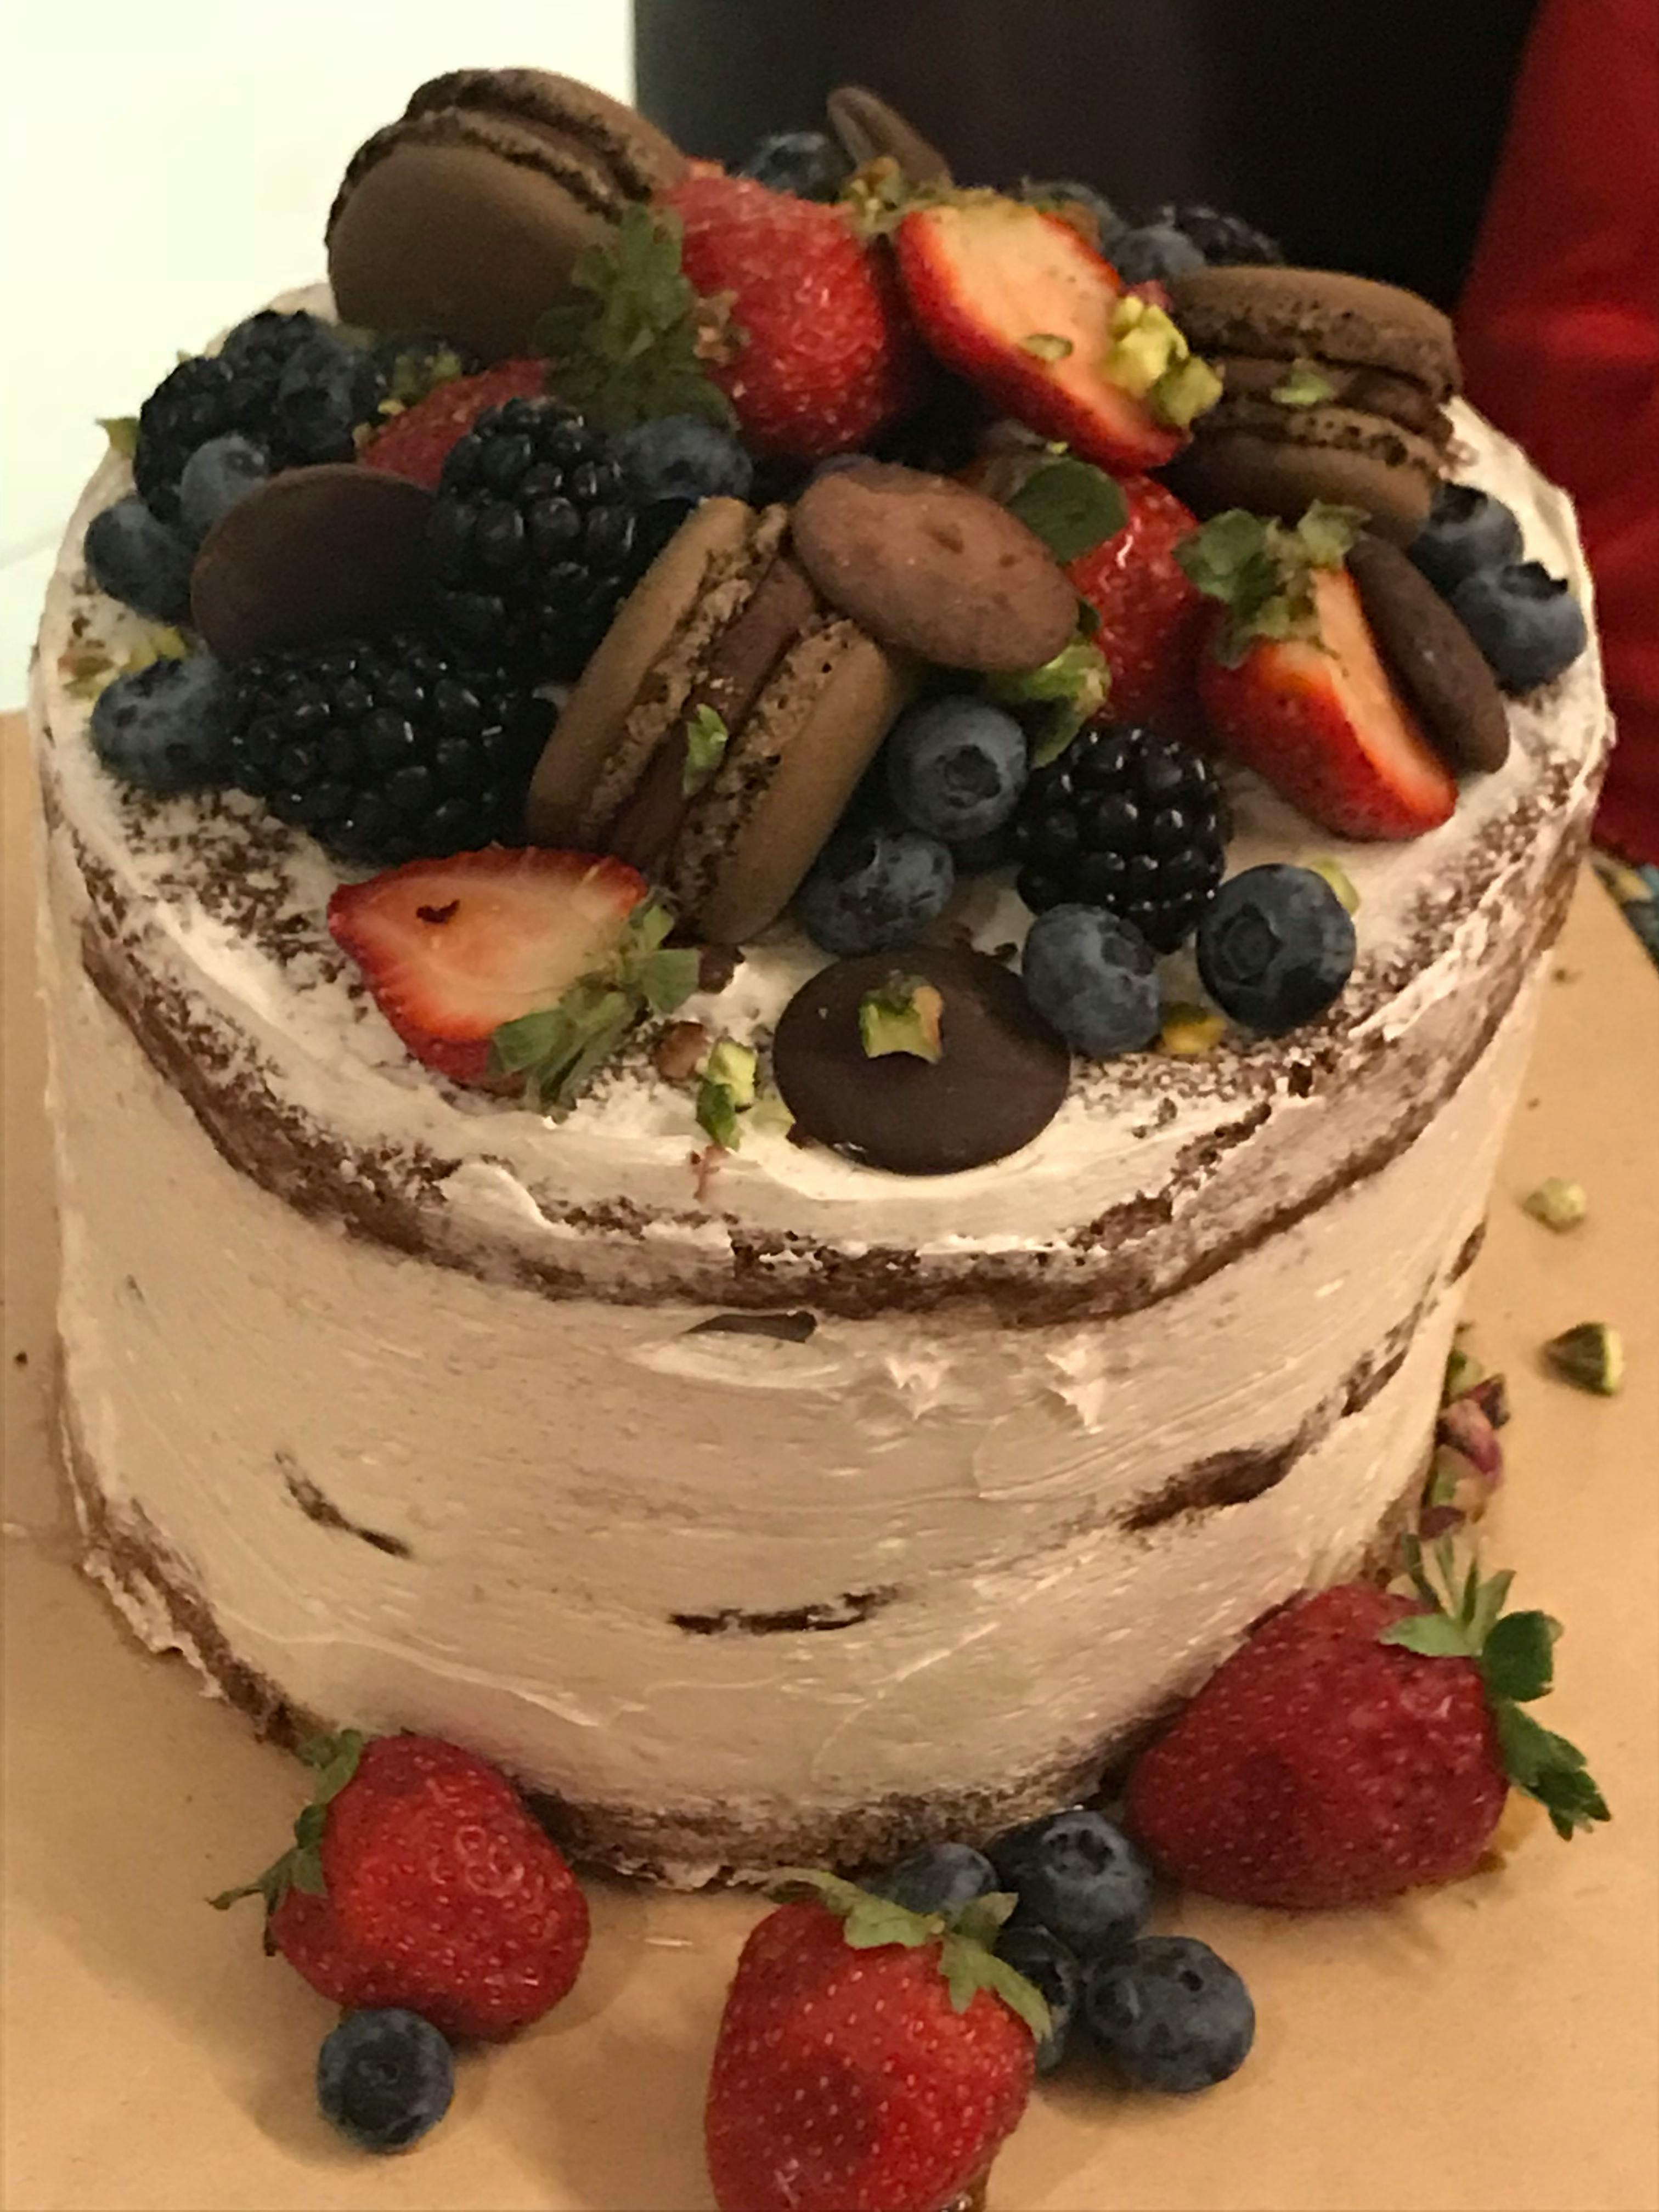 Free stock photo of birthday cake, cake, red fruits